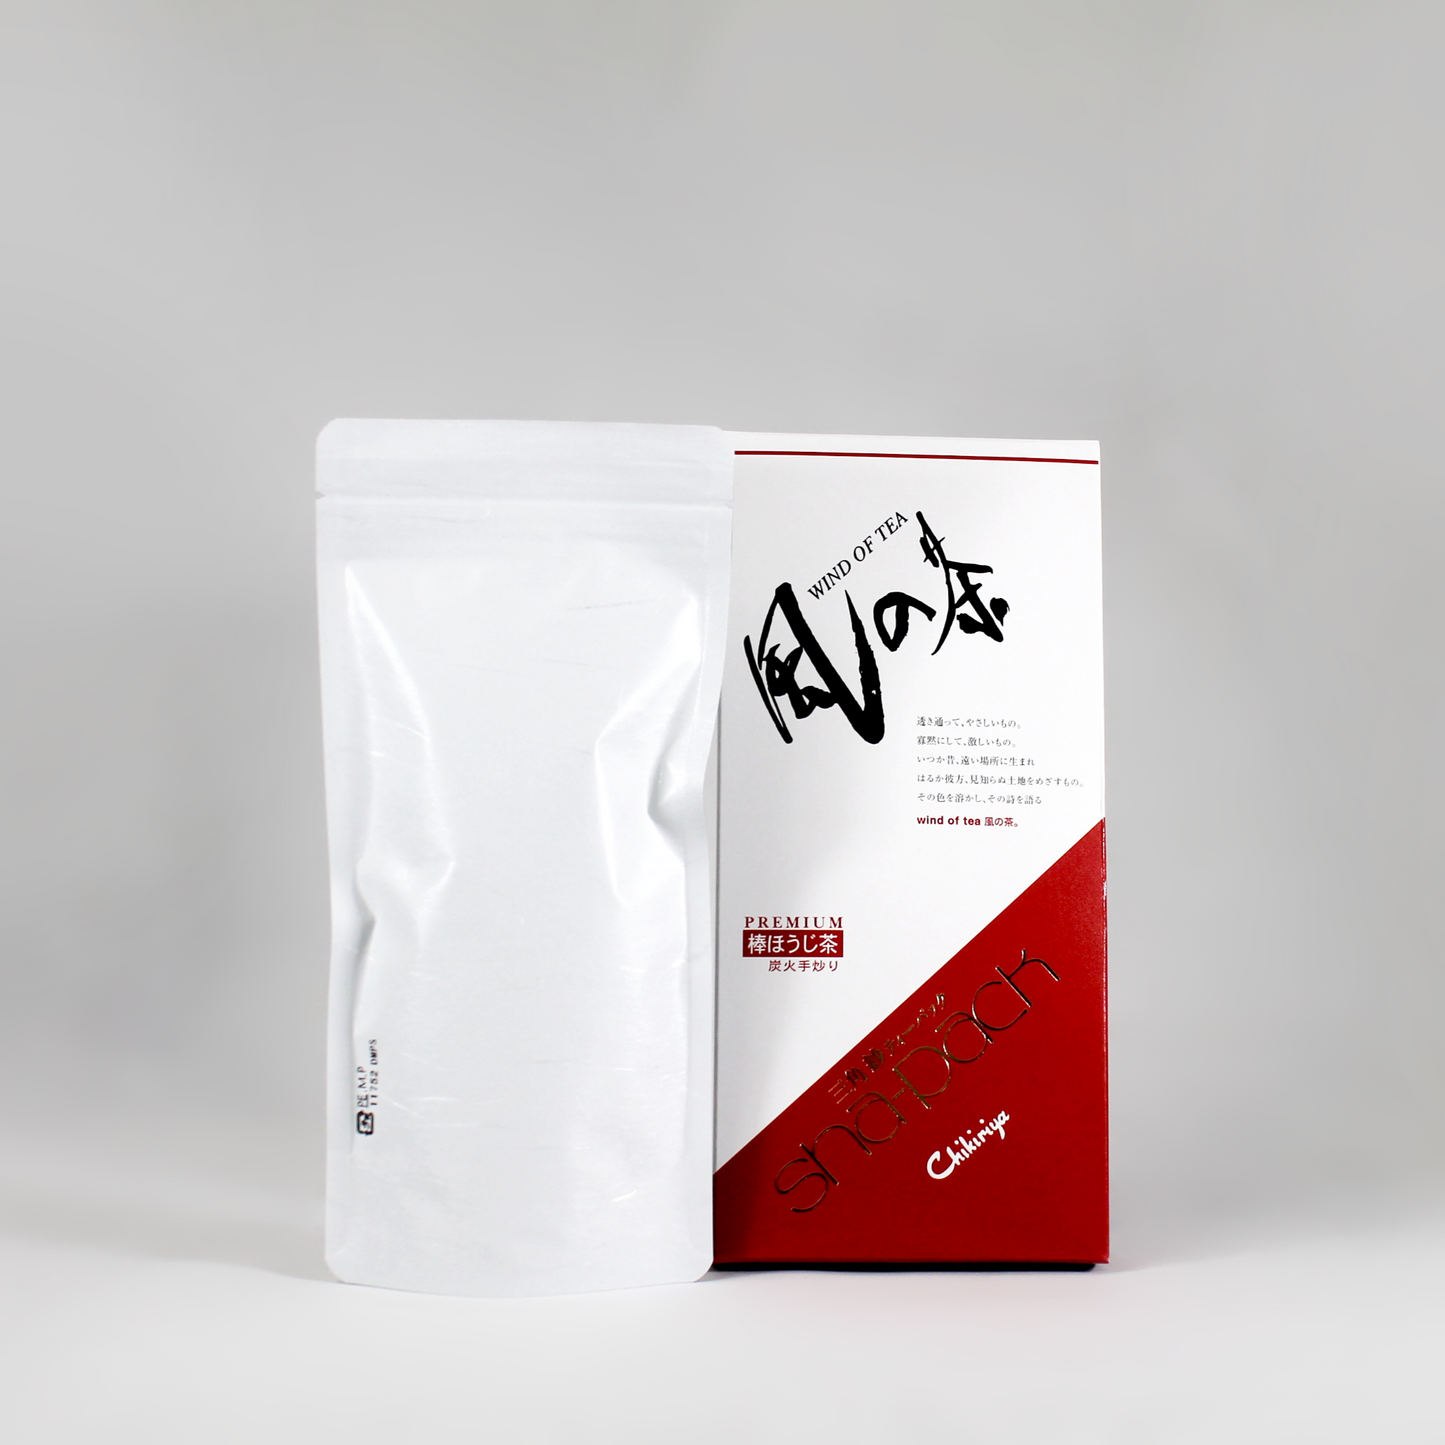 Premium Hojicha Rod (charcoal roasted by hand) - 2.5g x 12 Tea bags